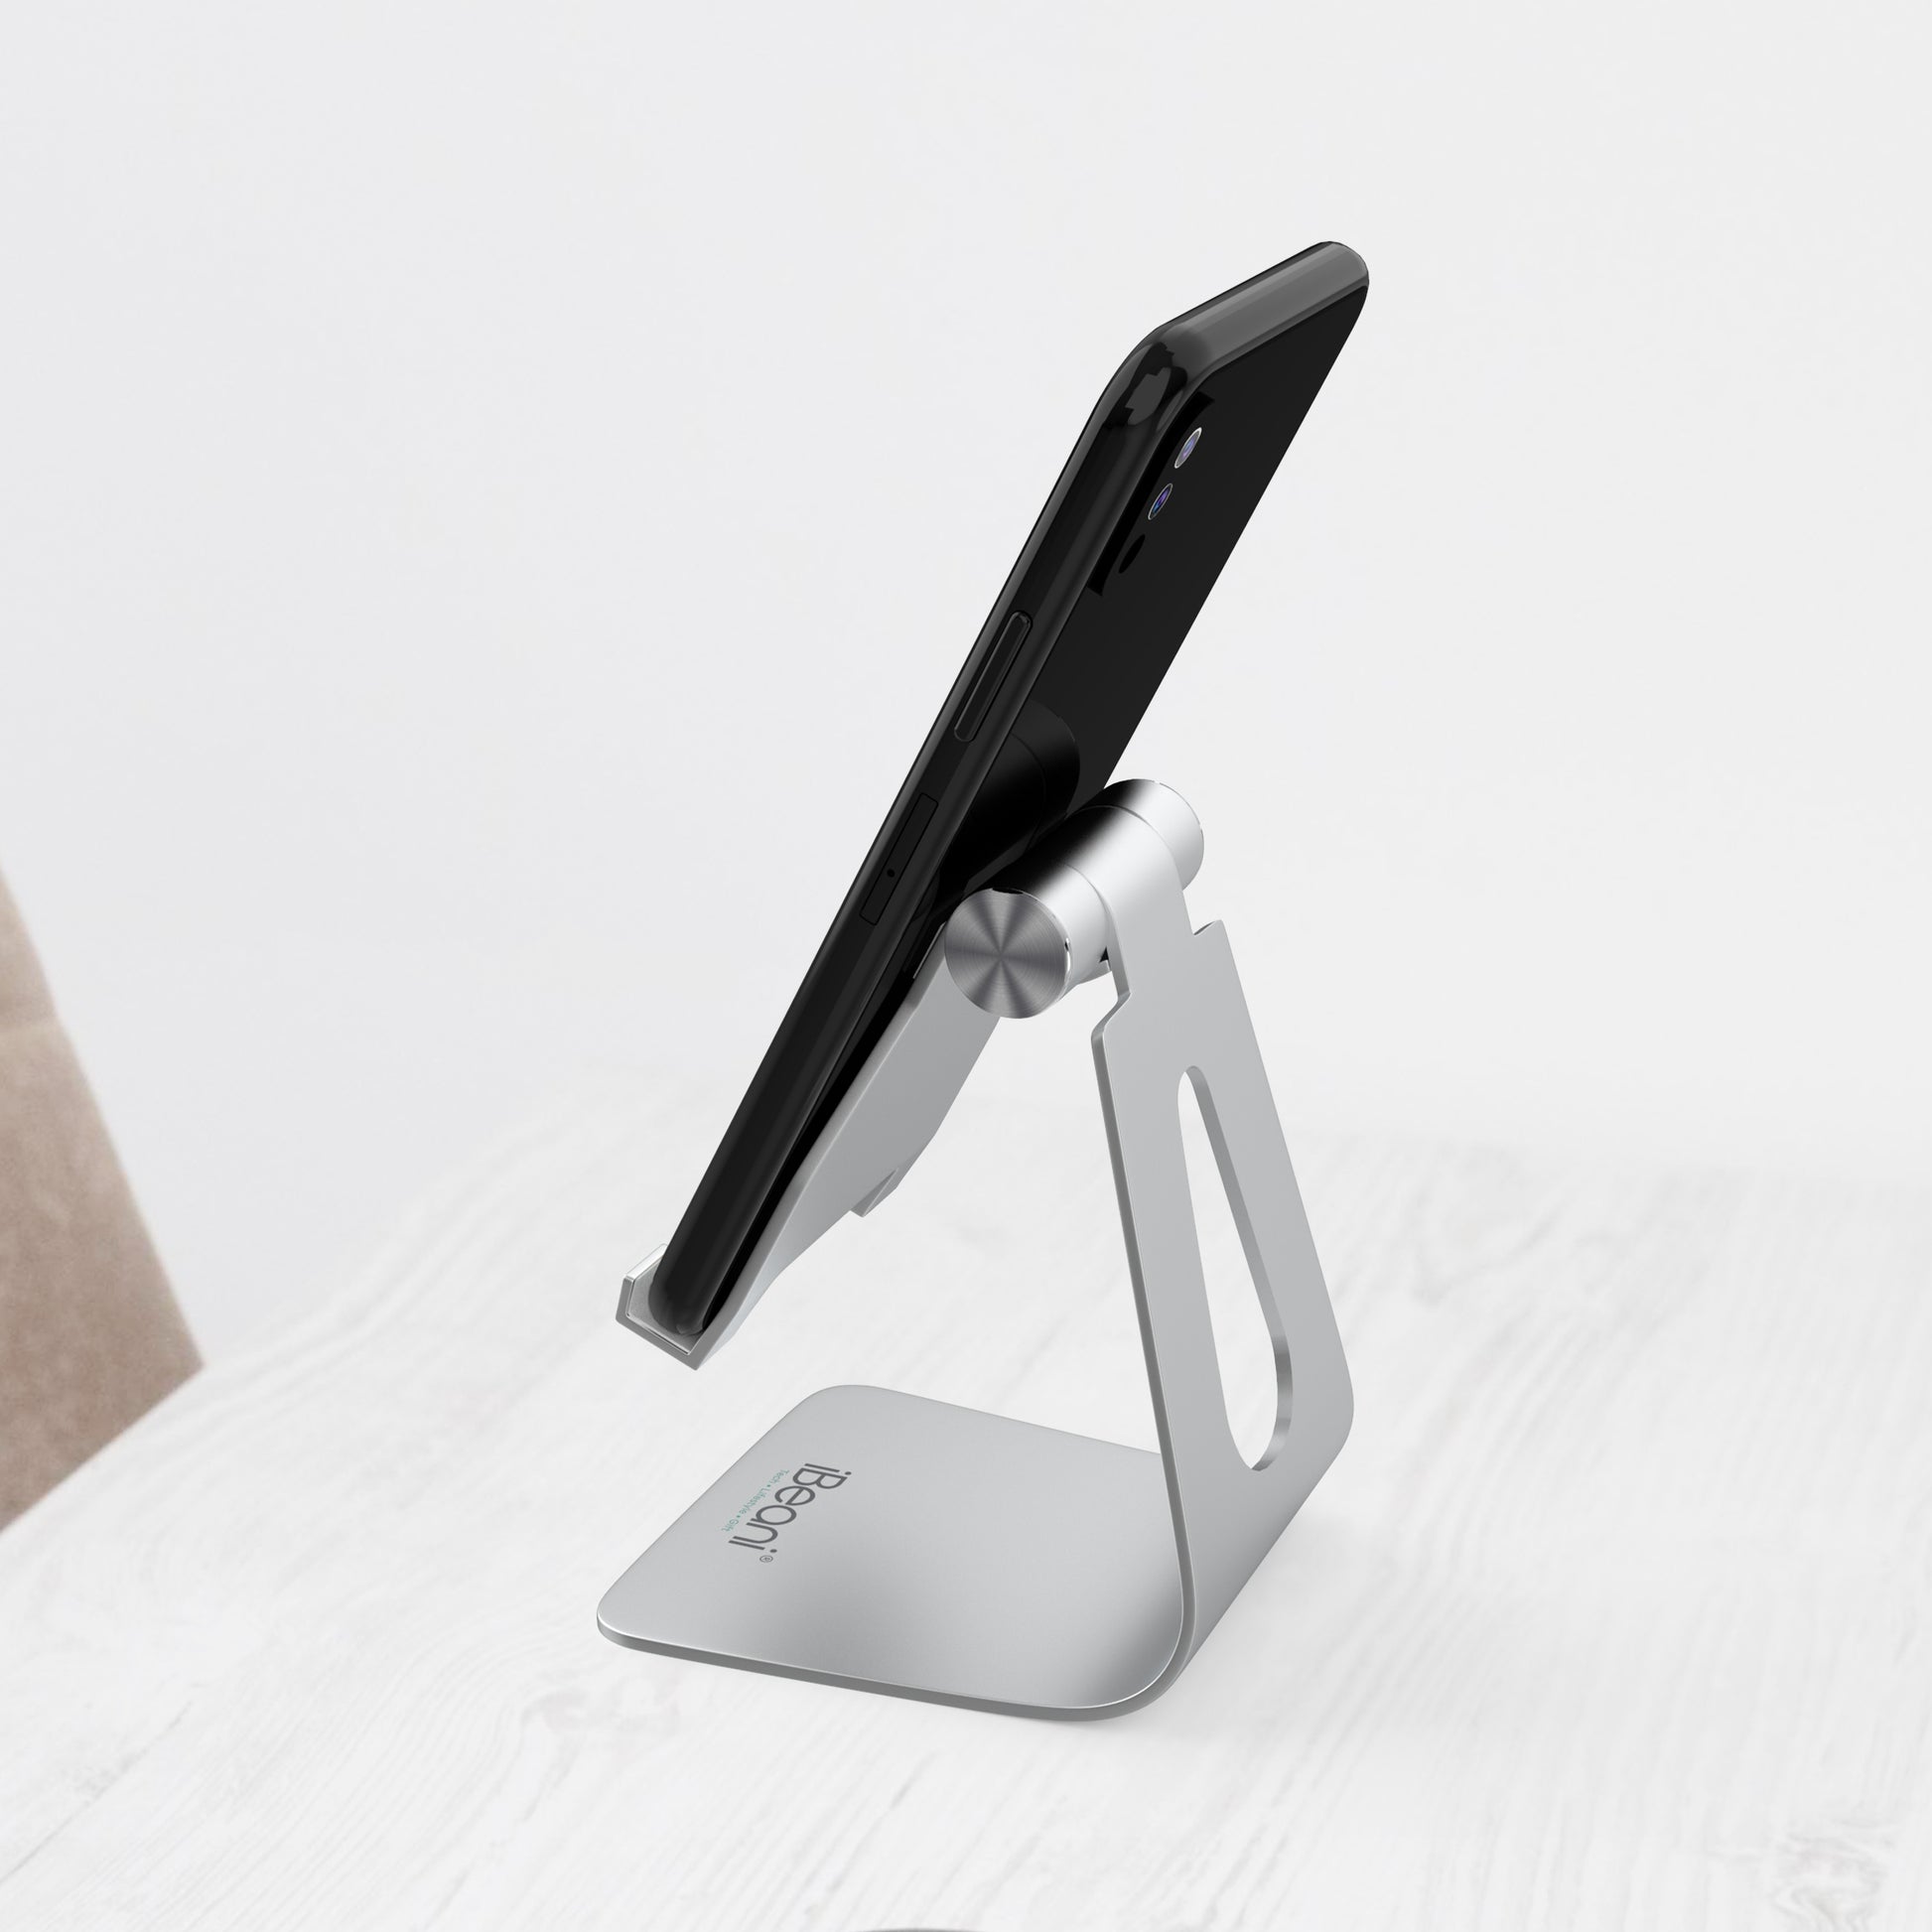 iBeani Mobile Phone Stand, Universal Adjustable Mobile Phone Holder Mount 